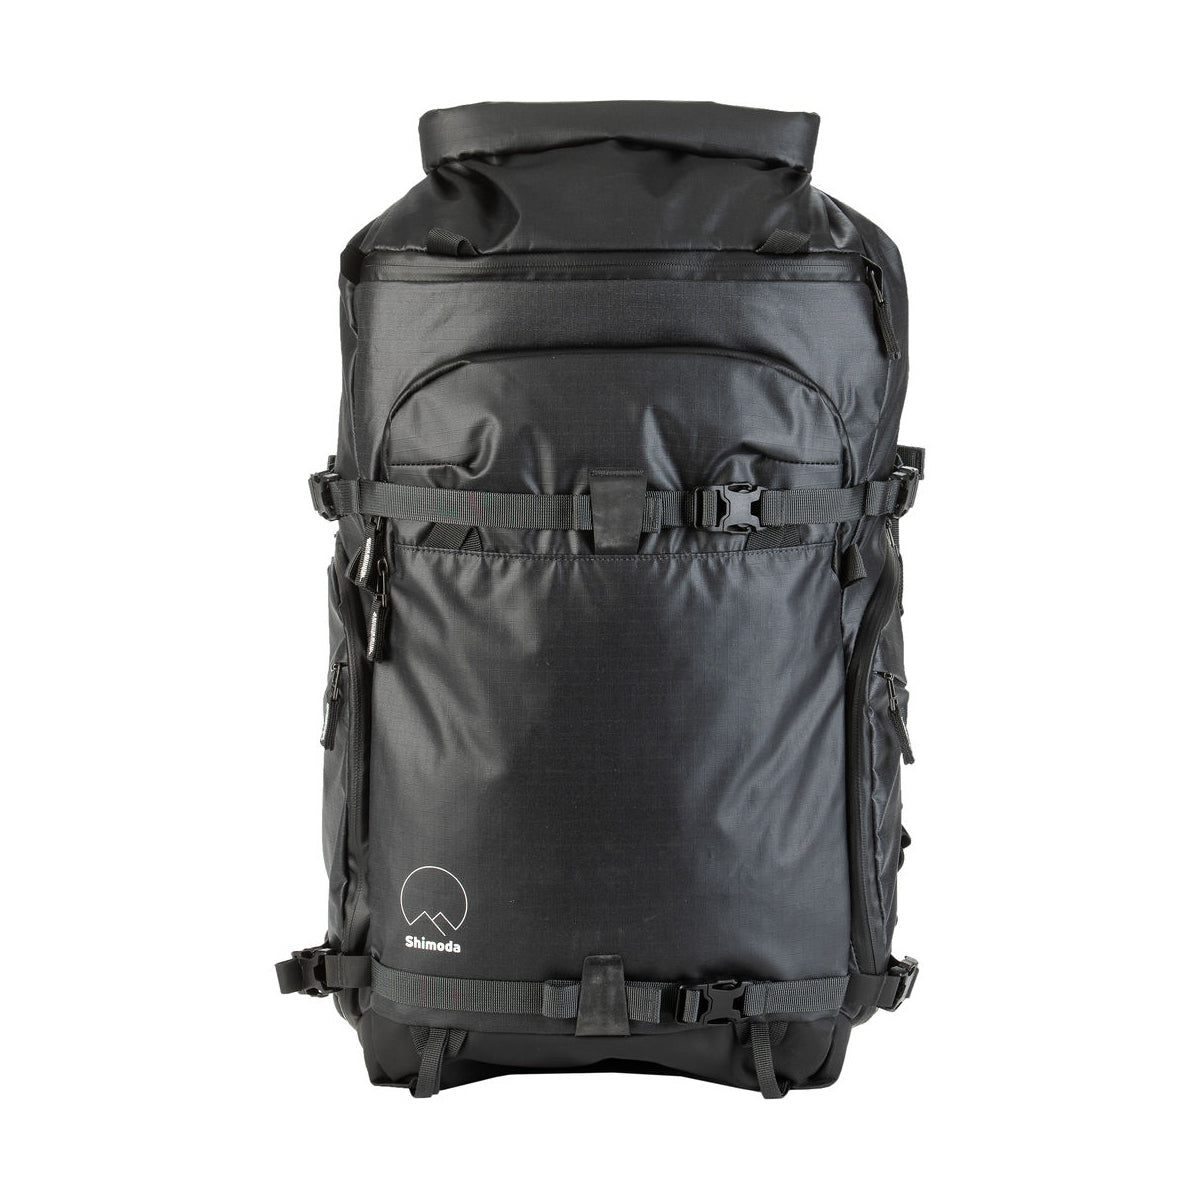 Shimoda Designs Action X30 Backpack - Black